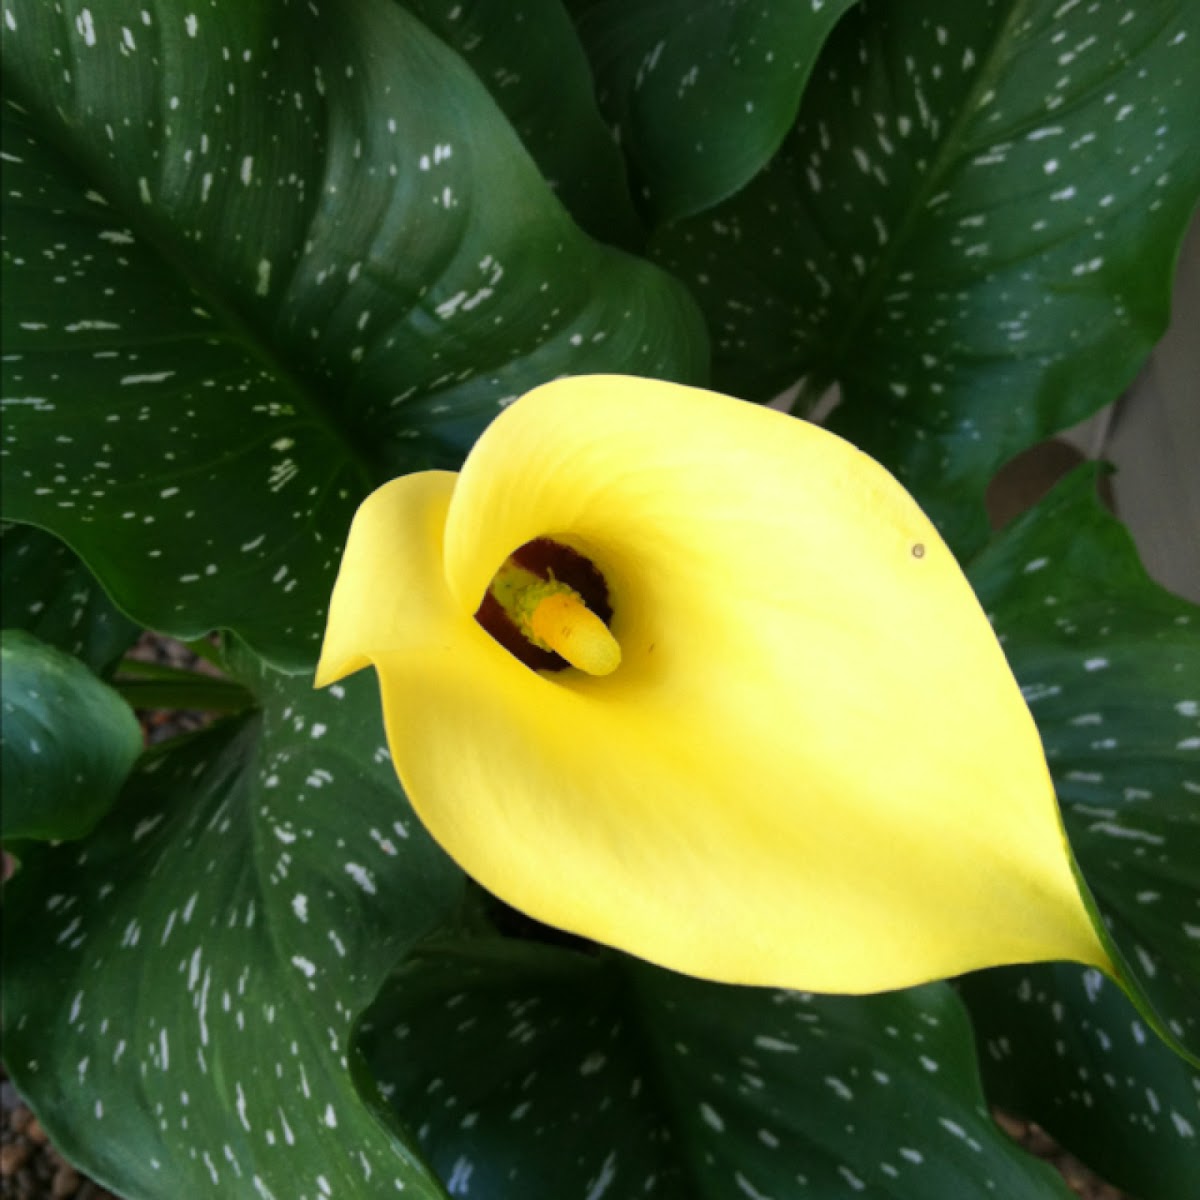 Yellow Cala Lily